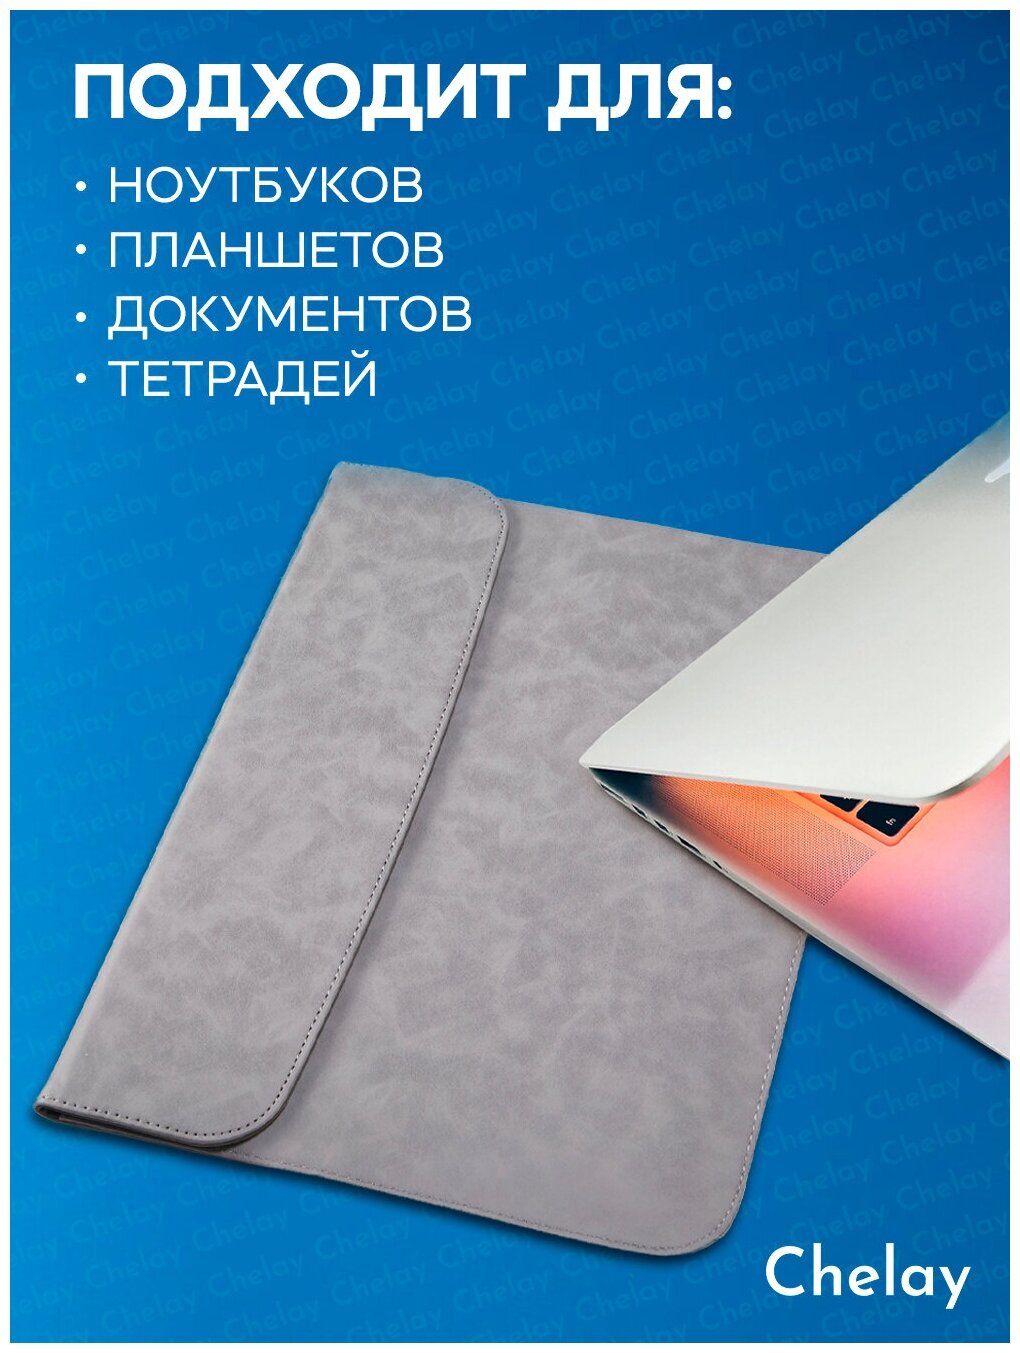 Chelay / Чехол для Аpple MacBook Air 13, Сумка для ноутбука MacBook Pro 13 Retina, Папка для планшета